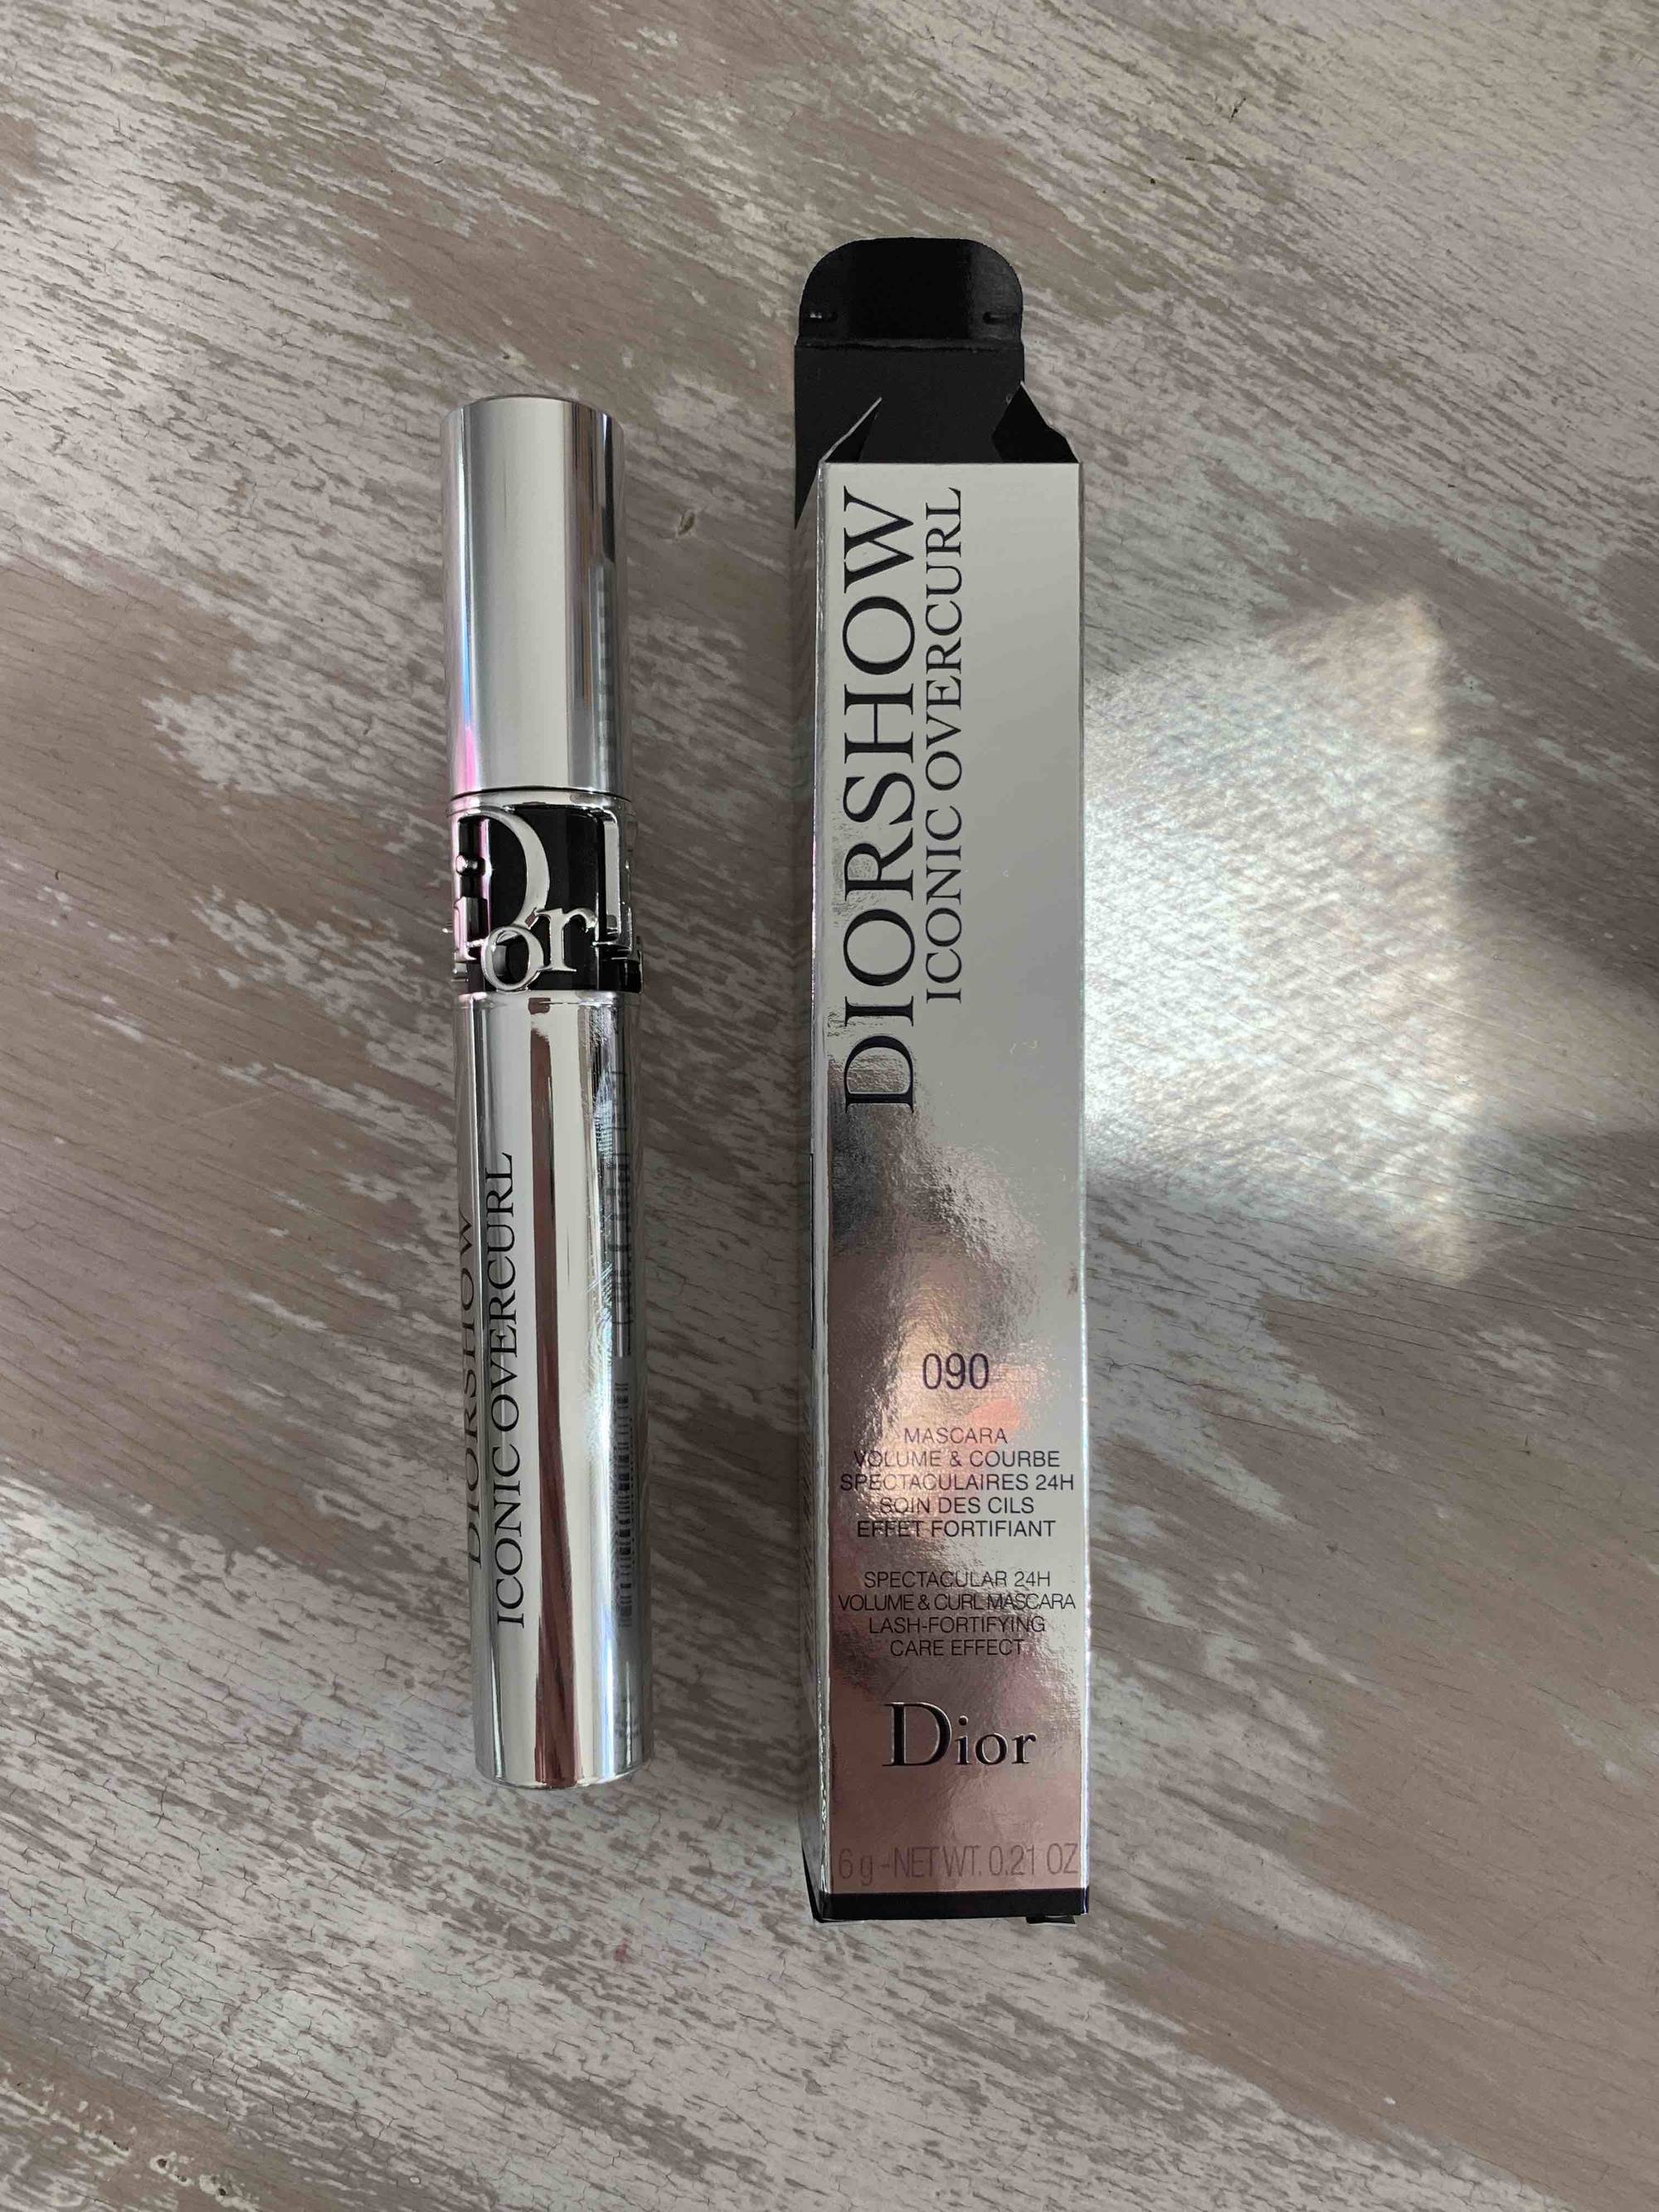 DIOR - Diorshow - Mascara volume & courbe spectaculaires